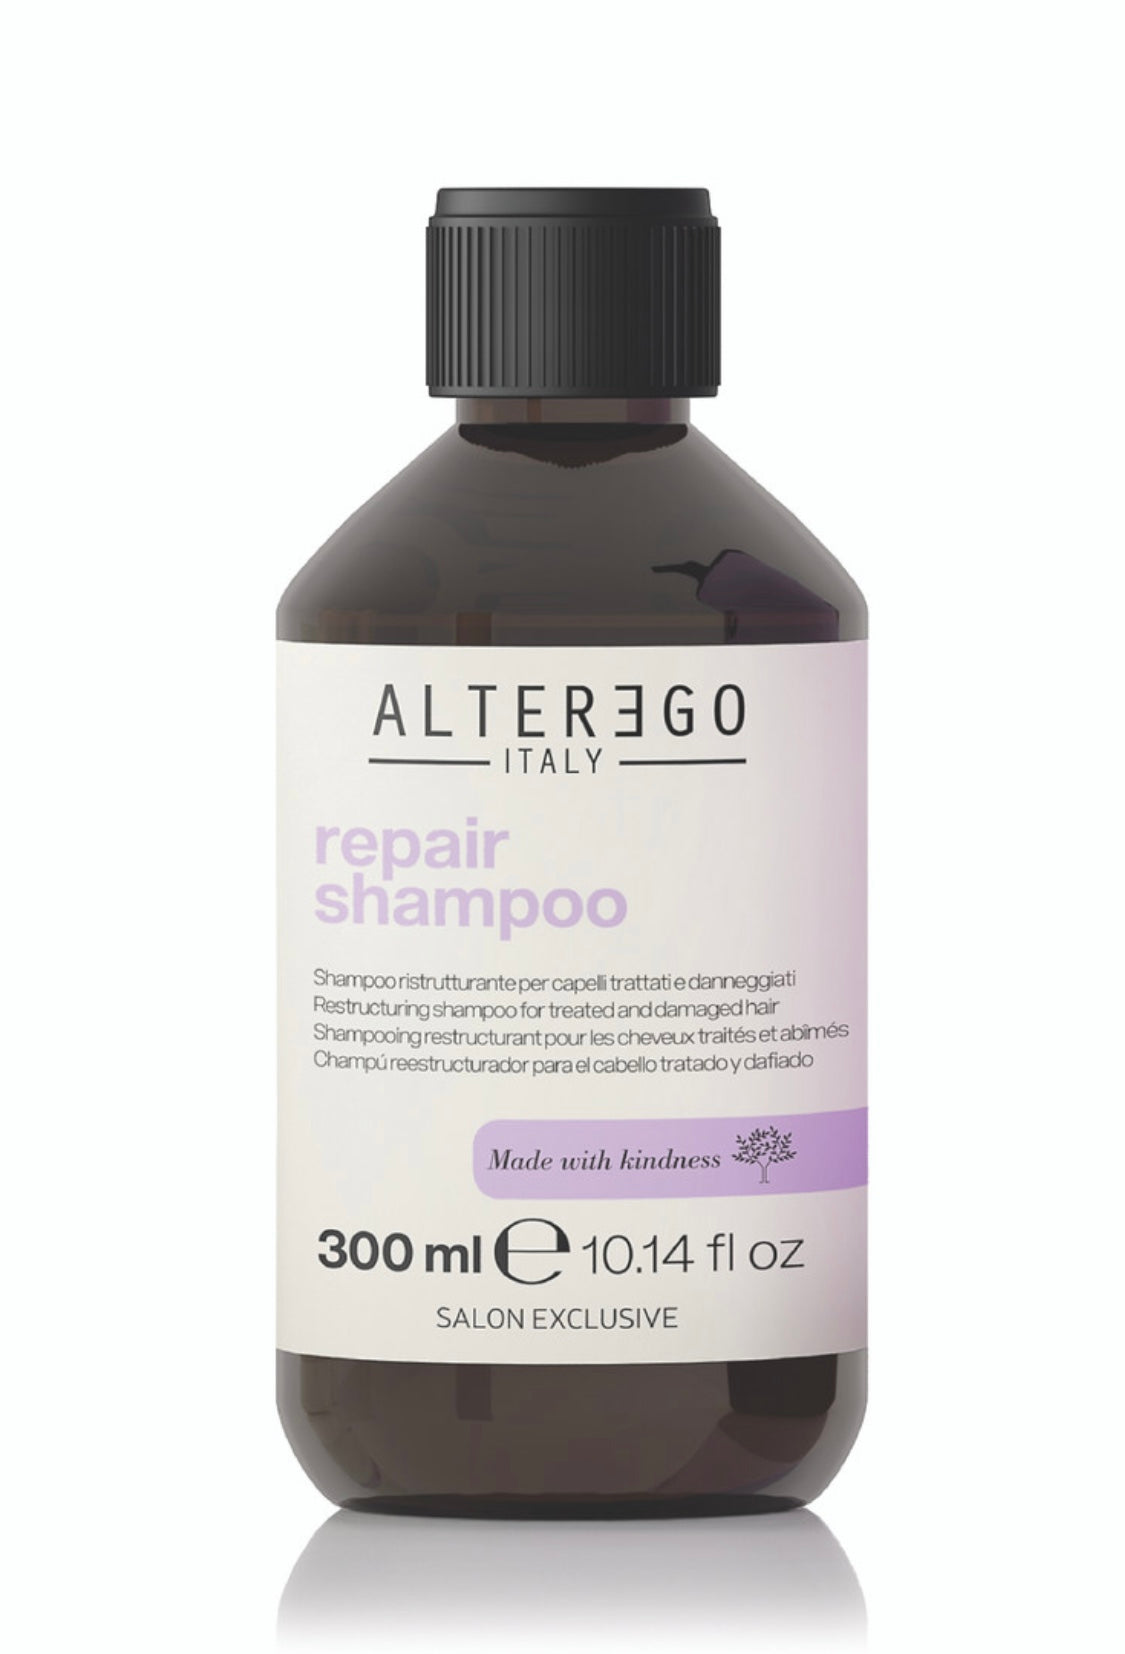 Alterego - Repair shampoo 10.14 fl. oz. / 300 ml